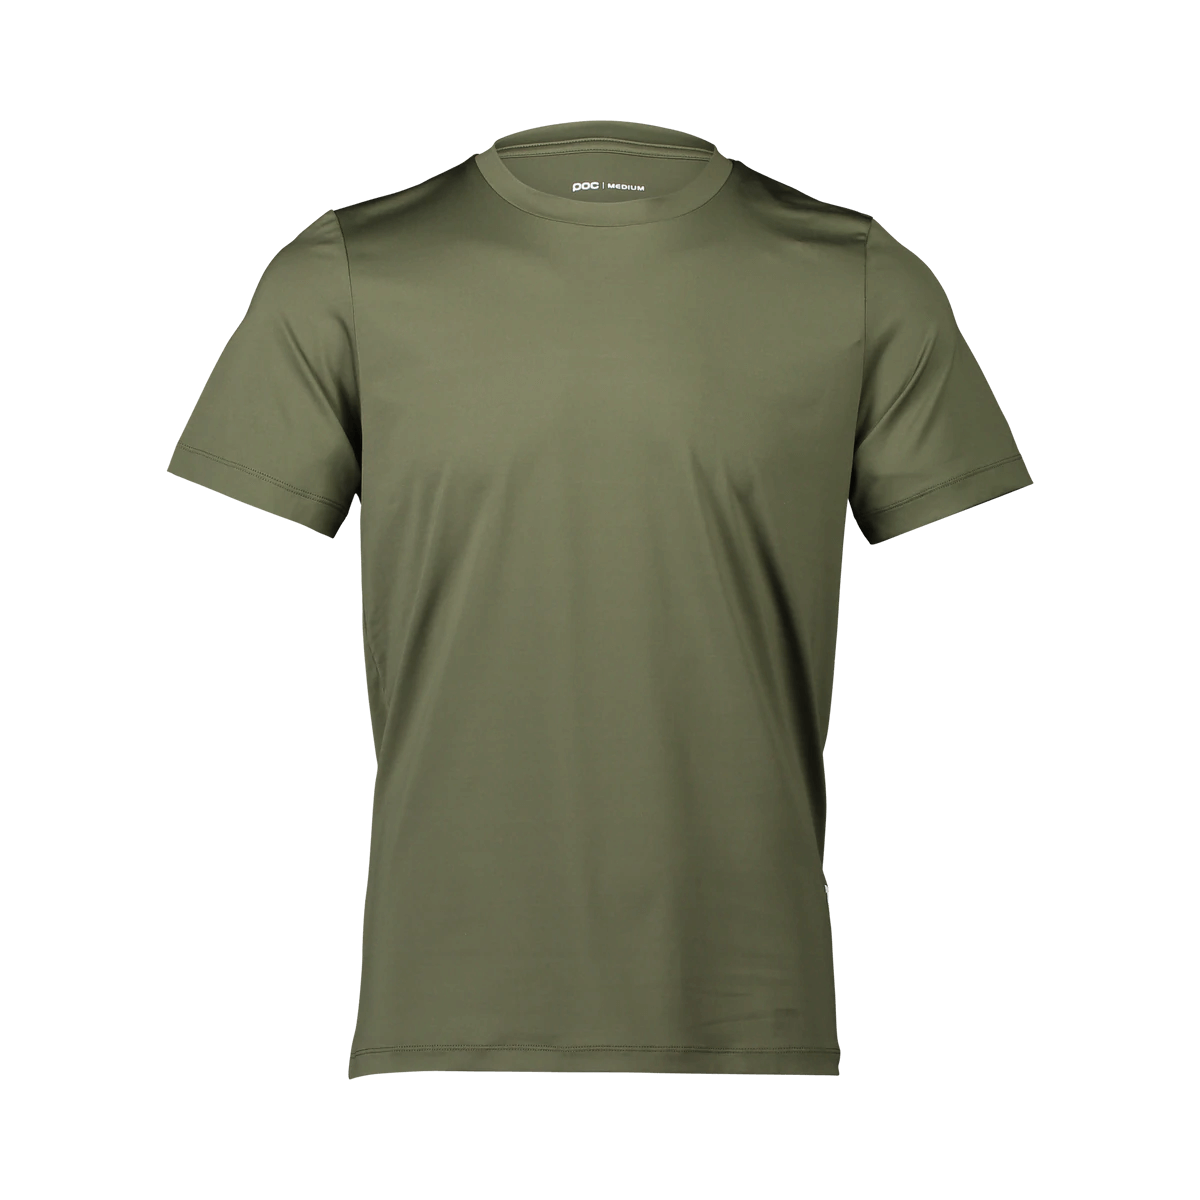 Tシャツ 52901-1460 エンデューロライトティー M's Reform Enduro Light Tee - Epidote Green [メンズ]